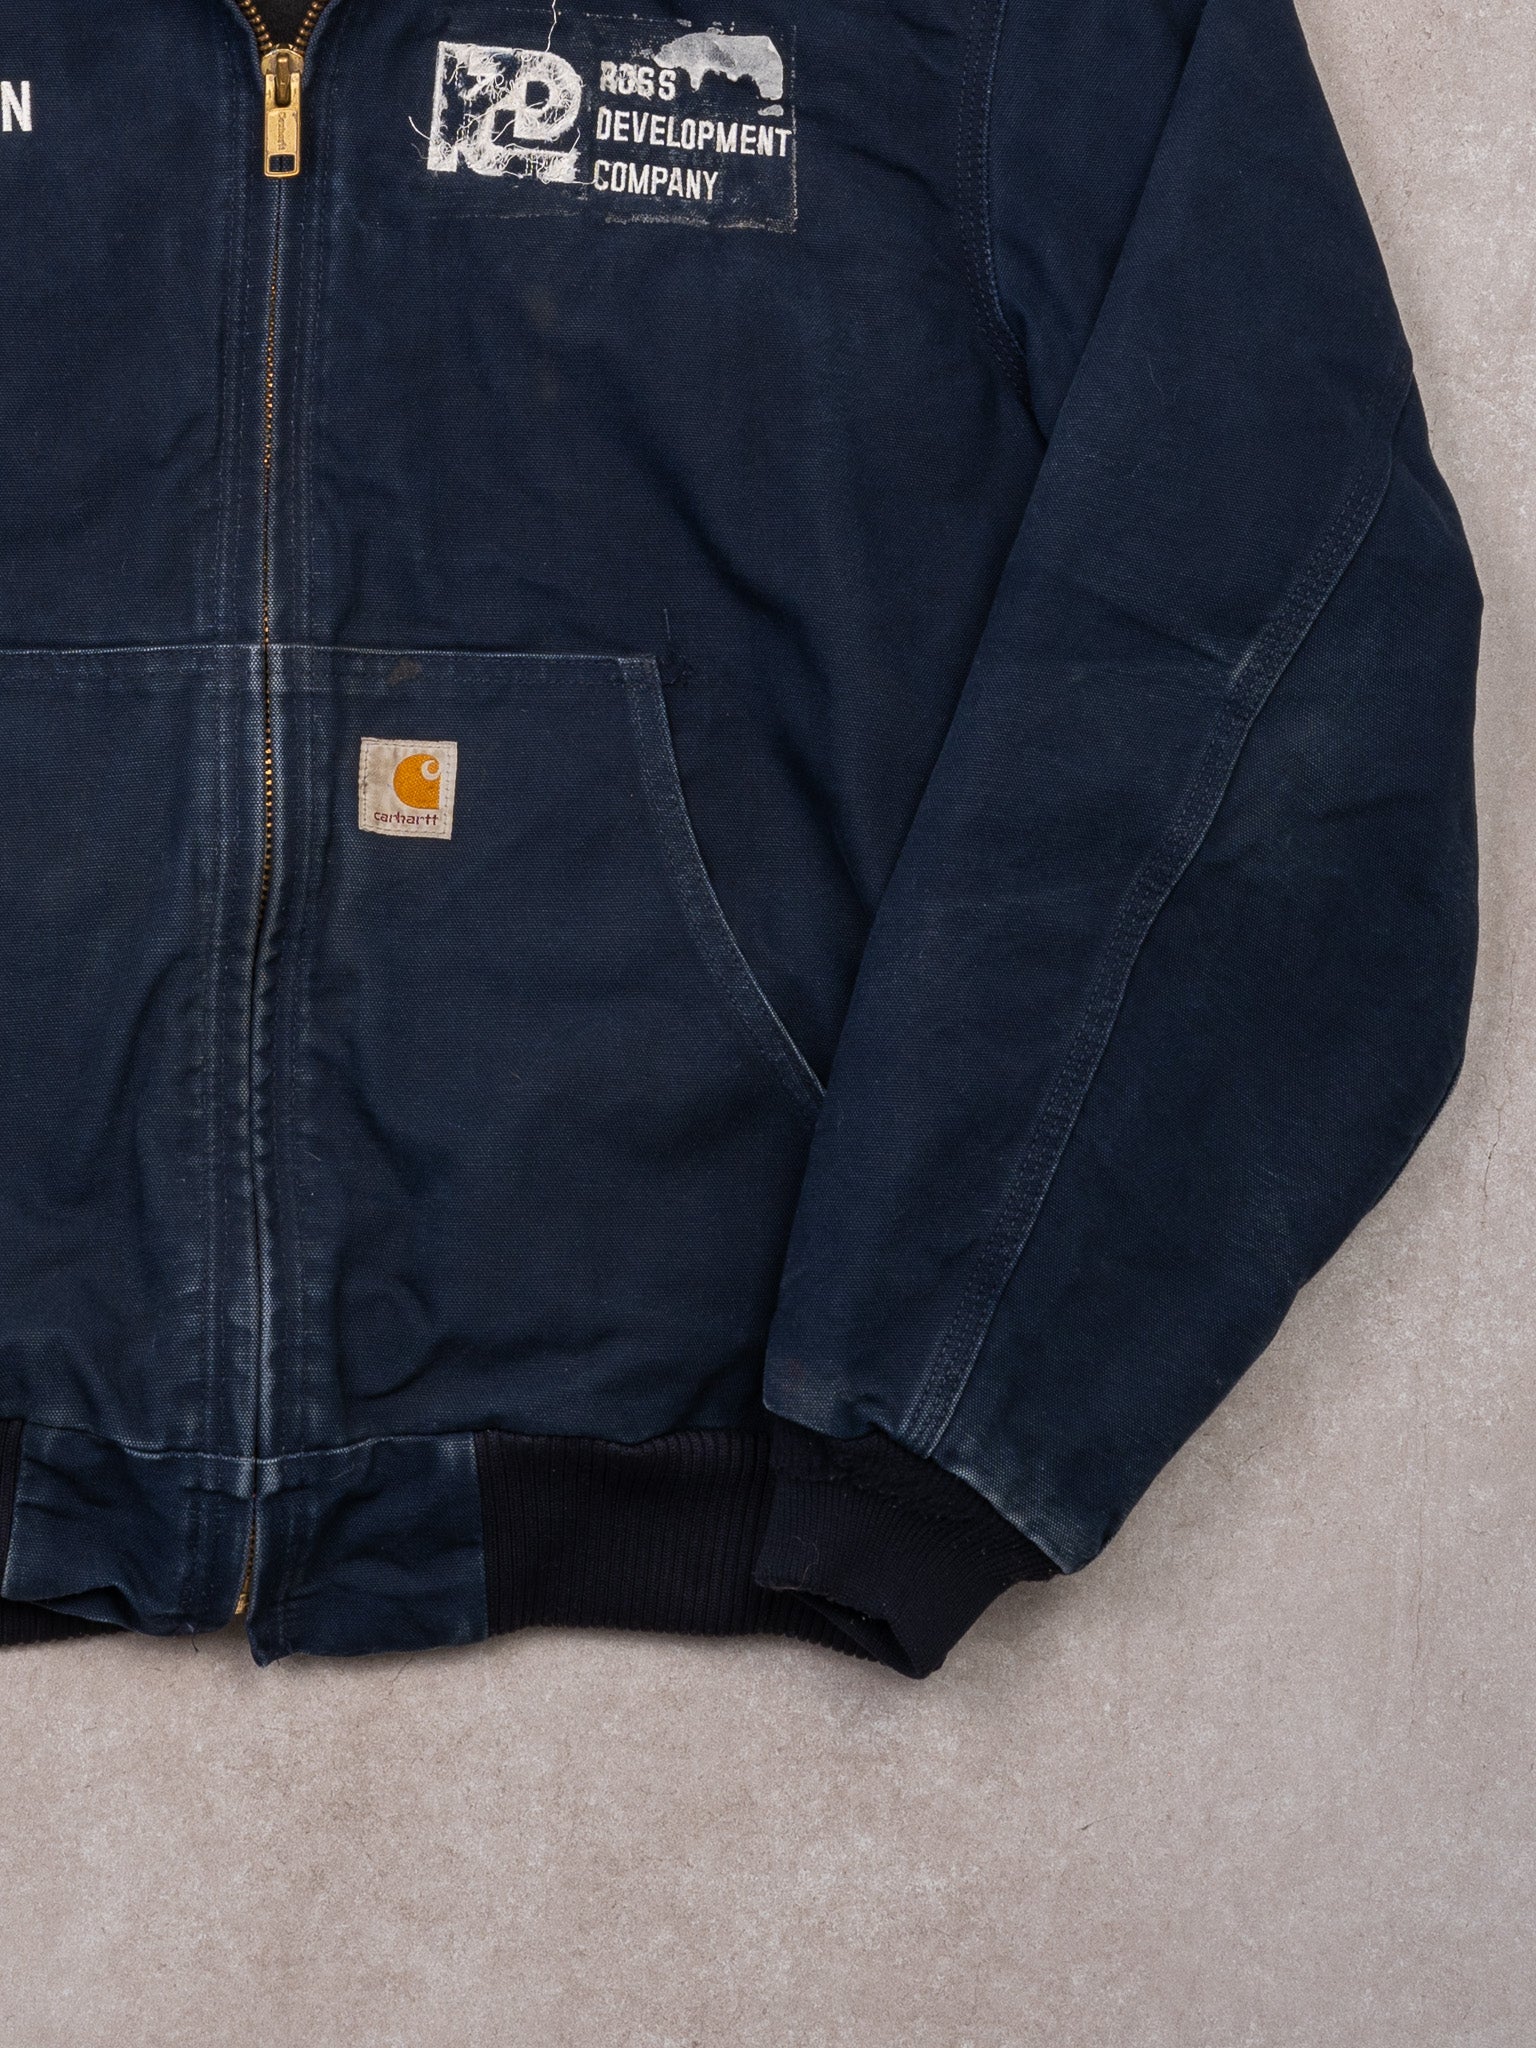 Vintage 90s Dark Blue Carhartt Ross Develoment Duck Insulated Jacket (L)